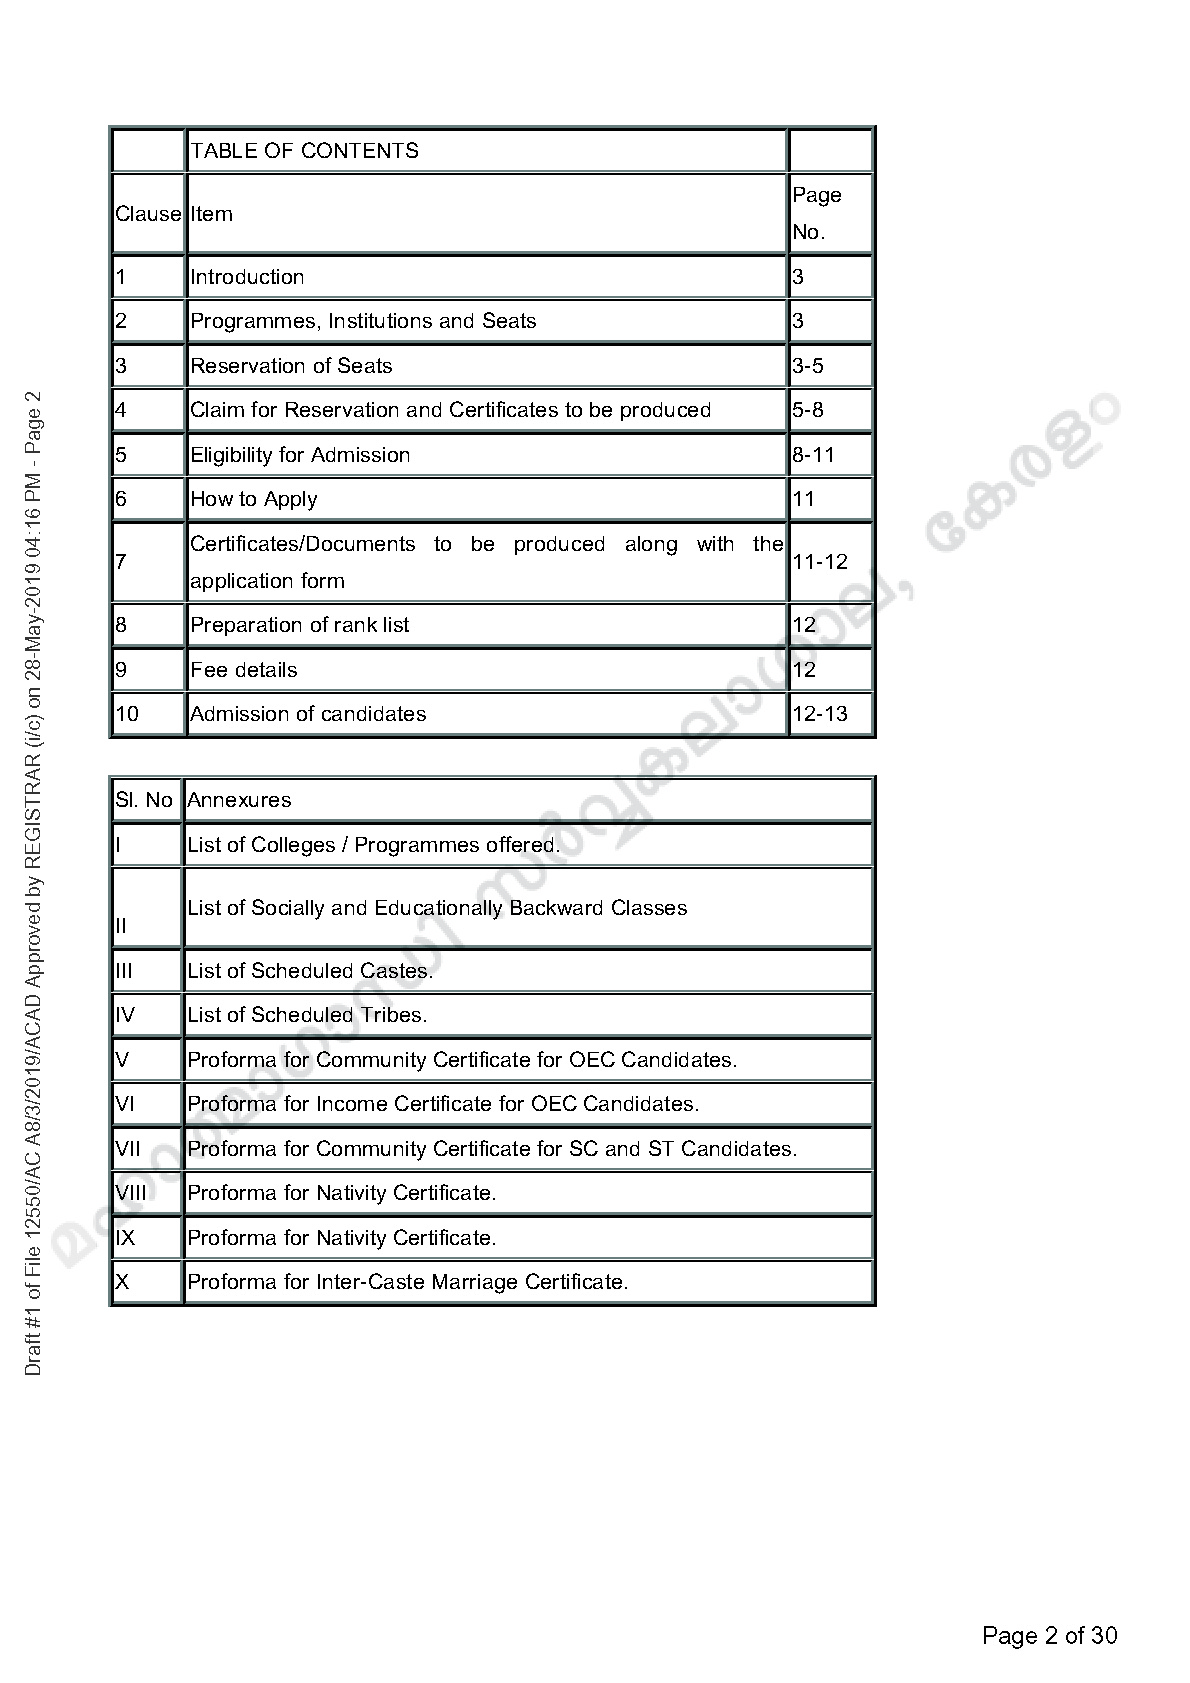 MG University B Ed Prospectus and Application form 2019 2020 - Notification Image 2